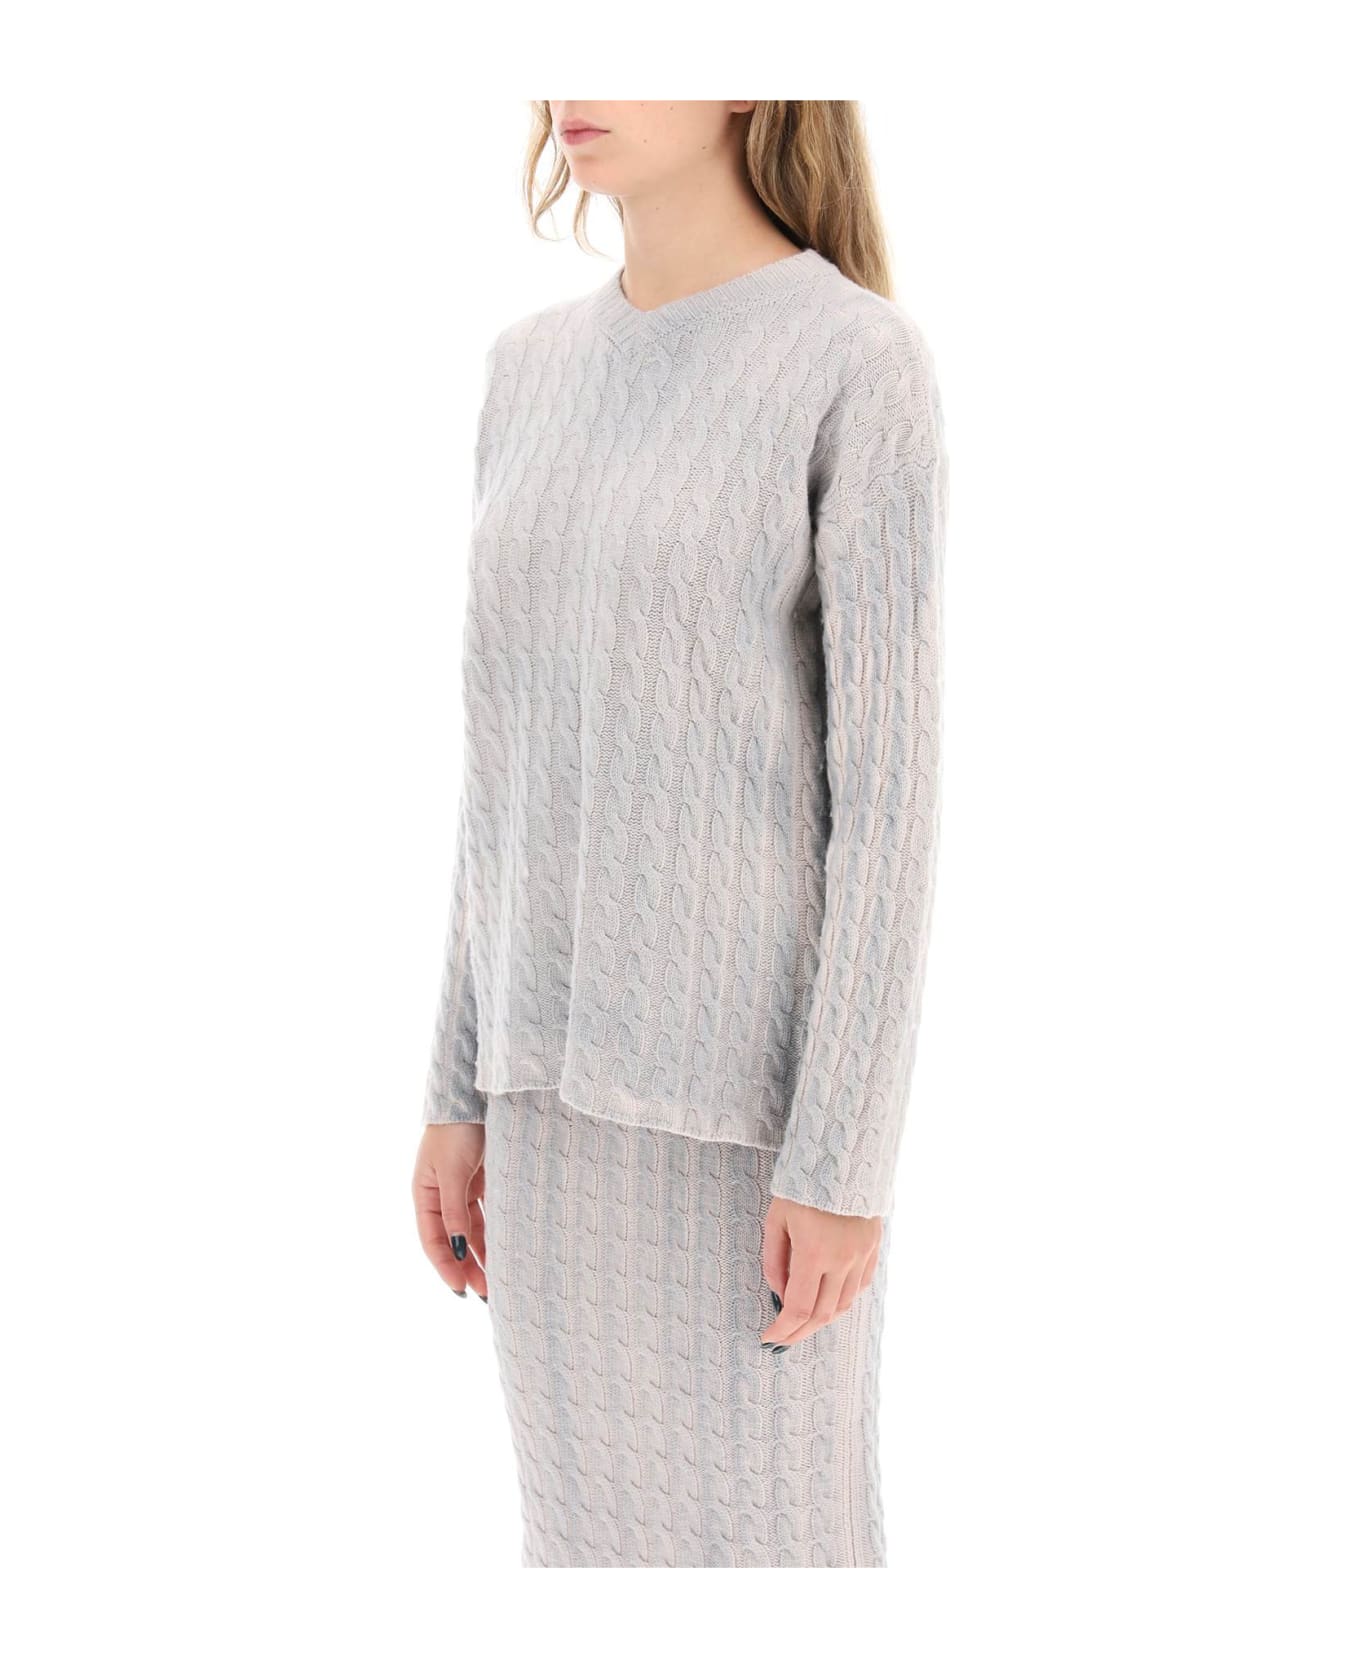 Paloma Wool Ainhoa Cable Knit Sweater - GRIS MEDIO (Grey)